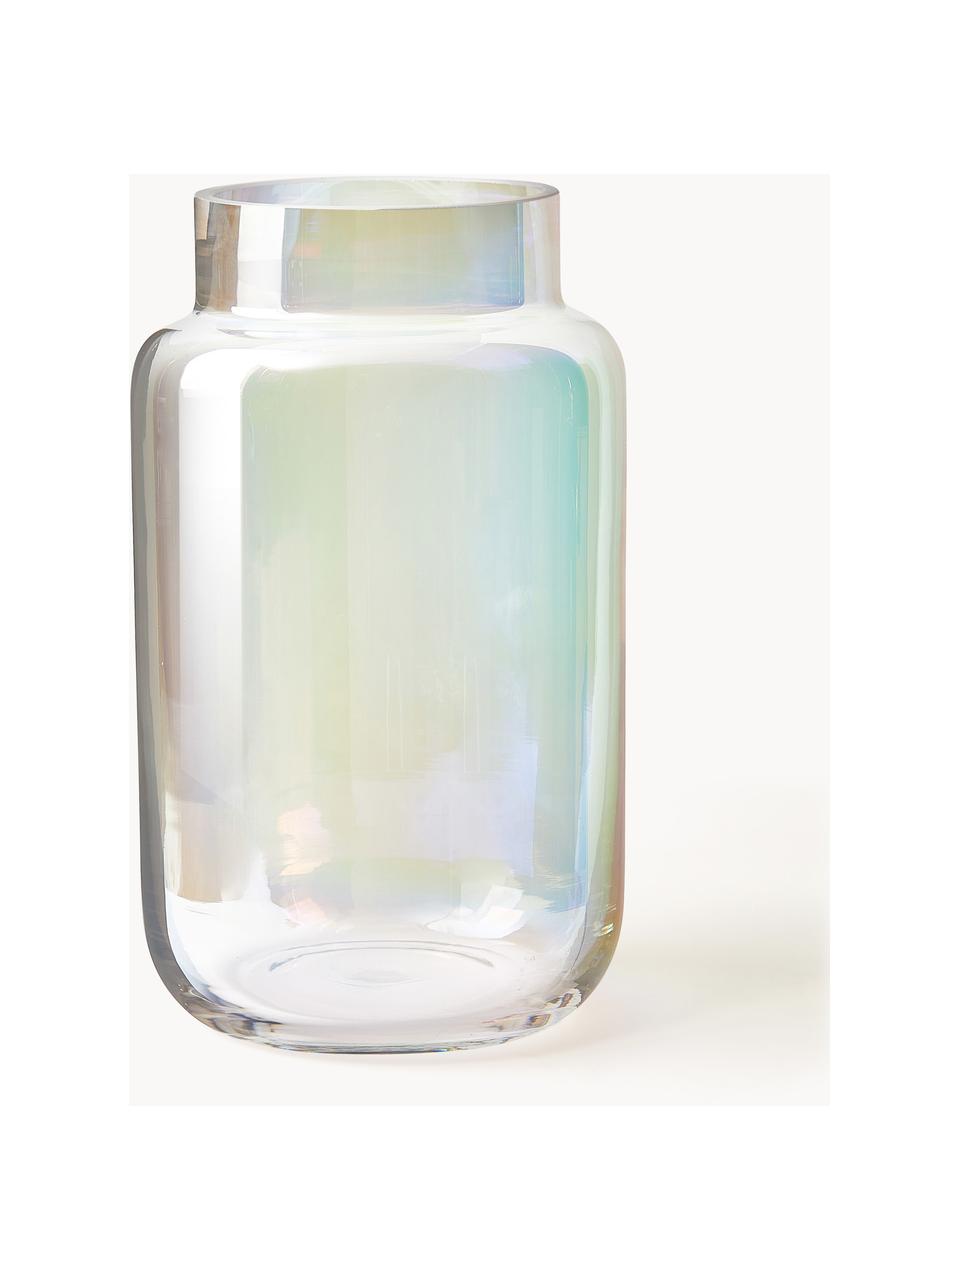 Jarrón grande de vidrio iridiscente Lasse, Vidrio, Transparente iridiscente, Ø 13 x Al 22 cm